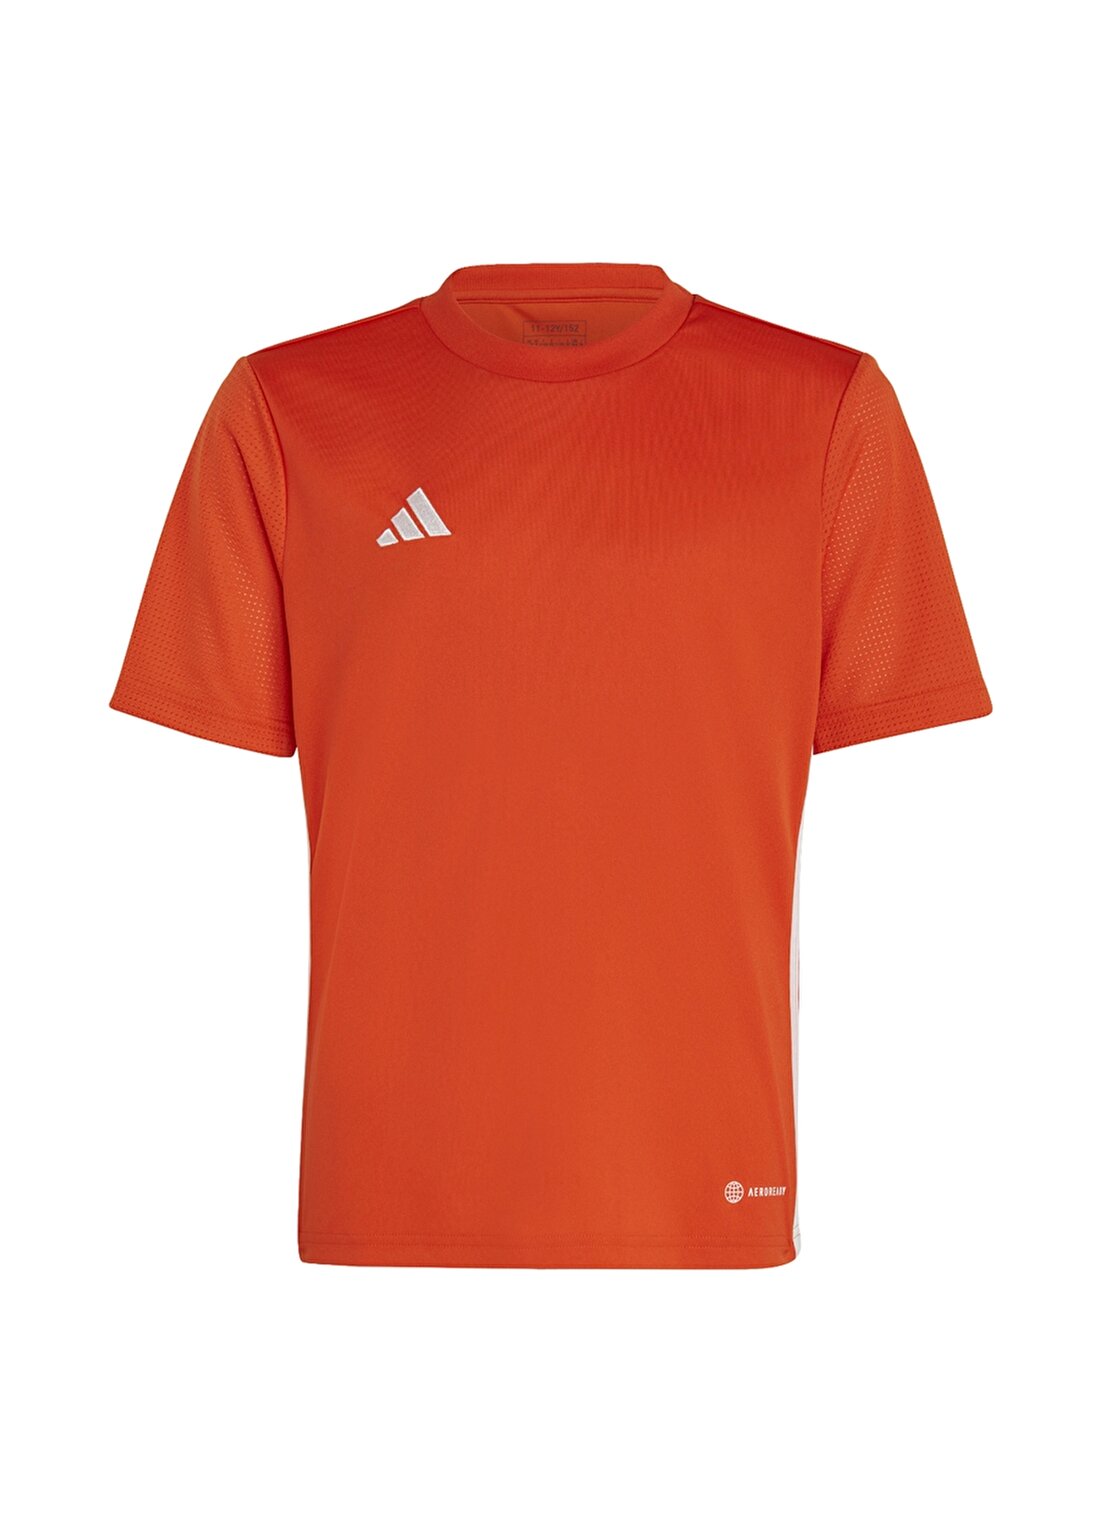 Adidas Turuncu Erkek Çocuk T-Shirt ELSA